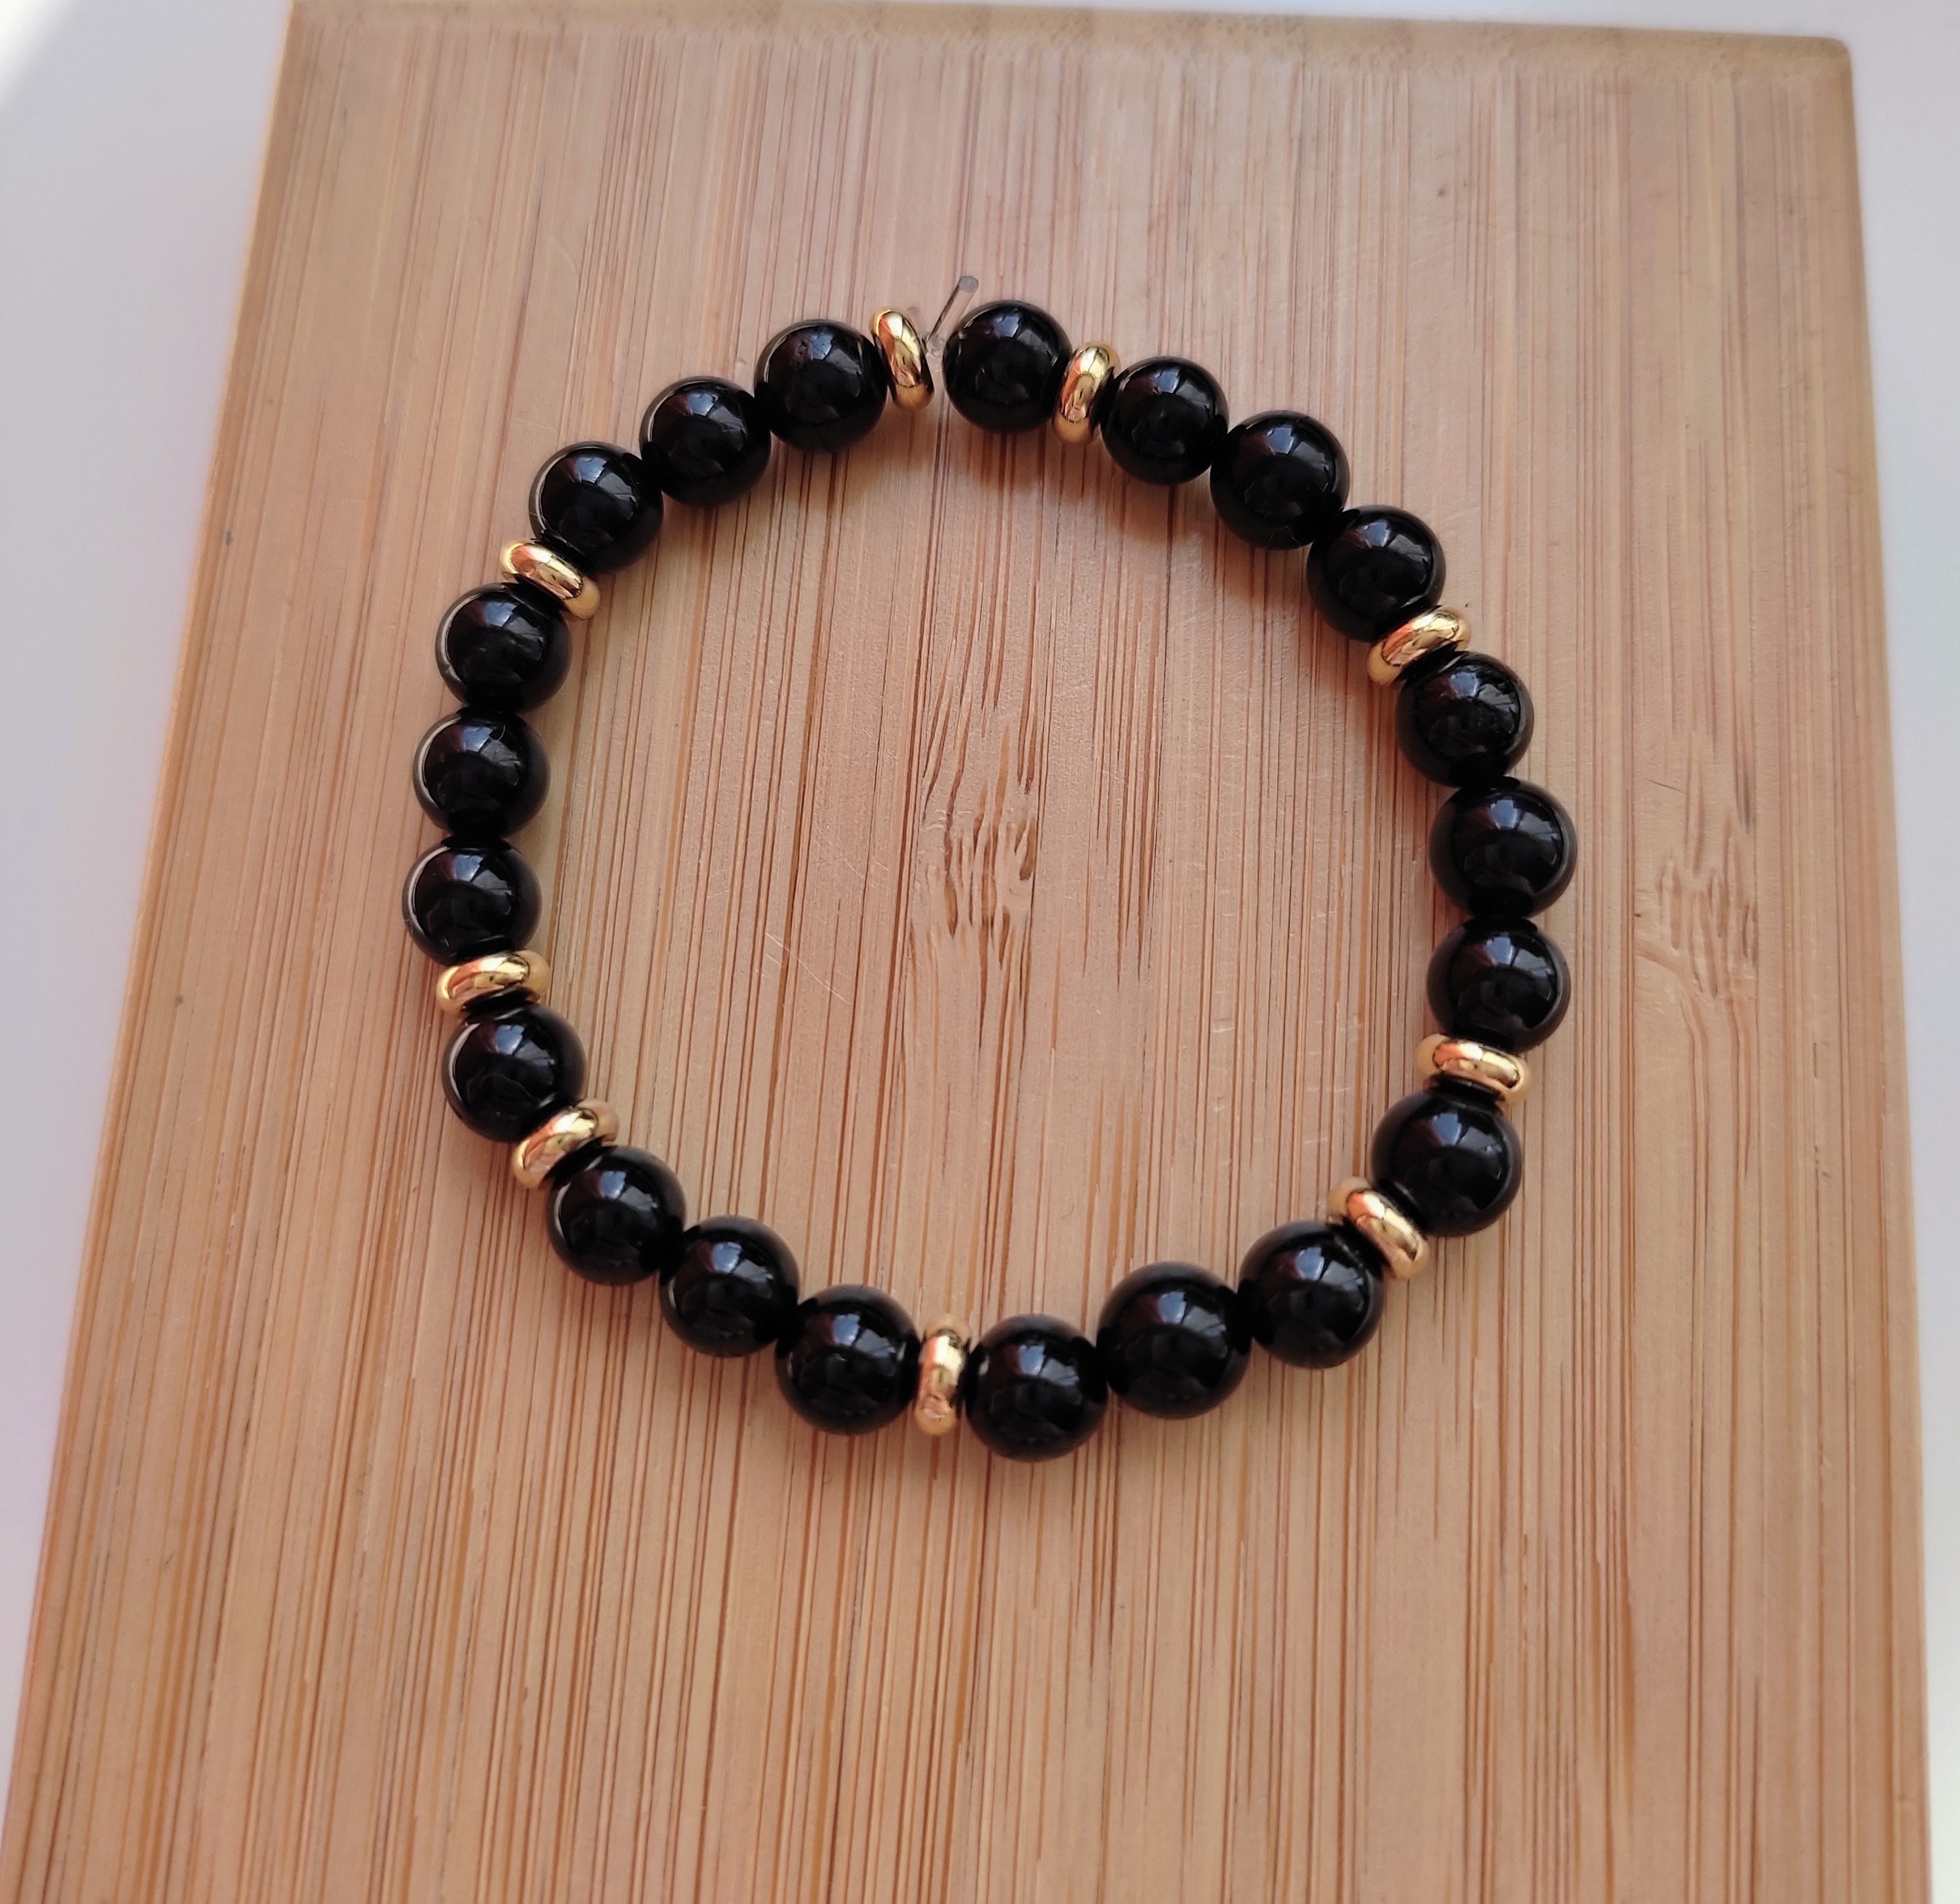 Pin by 👑mar u.j👑 on ❤❤Love ishqbaaz❤❤ | Hand chain bracelet, Hand bracelet,  Jewelry patterns